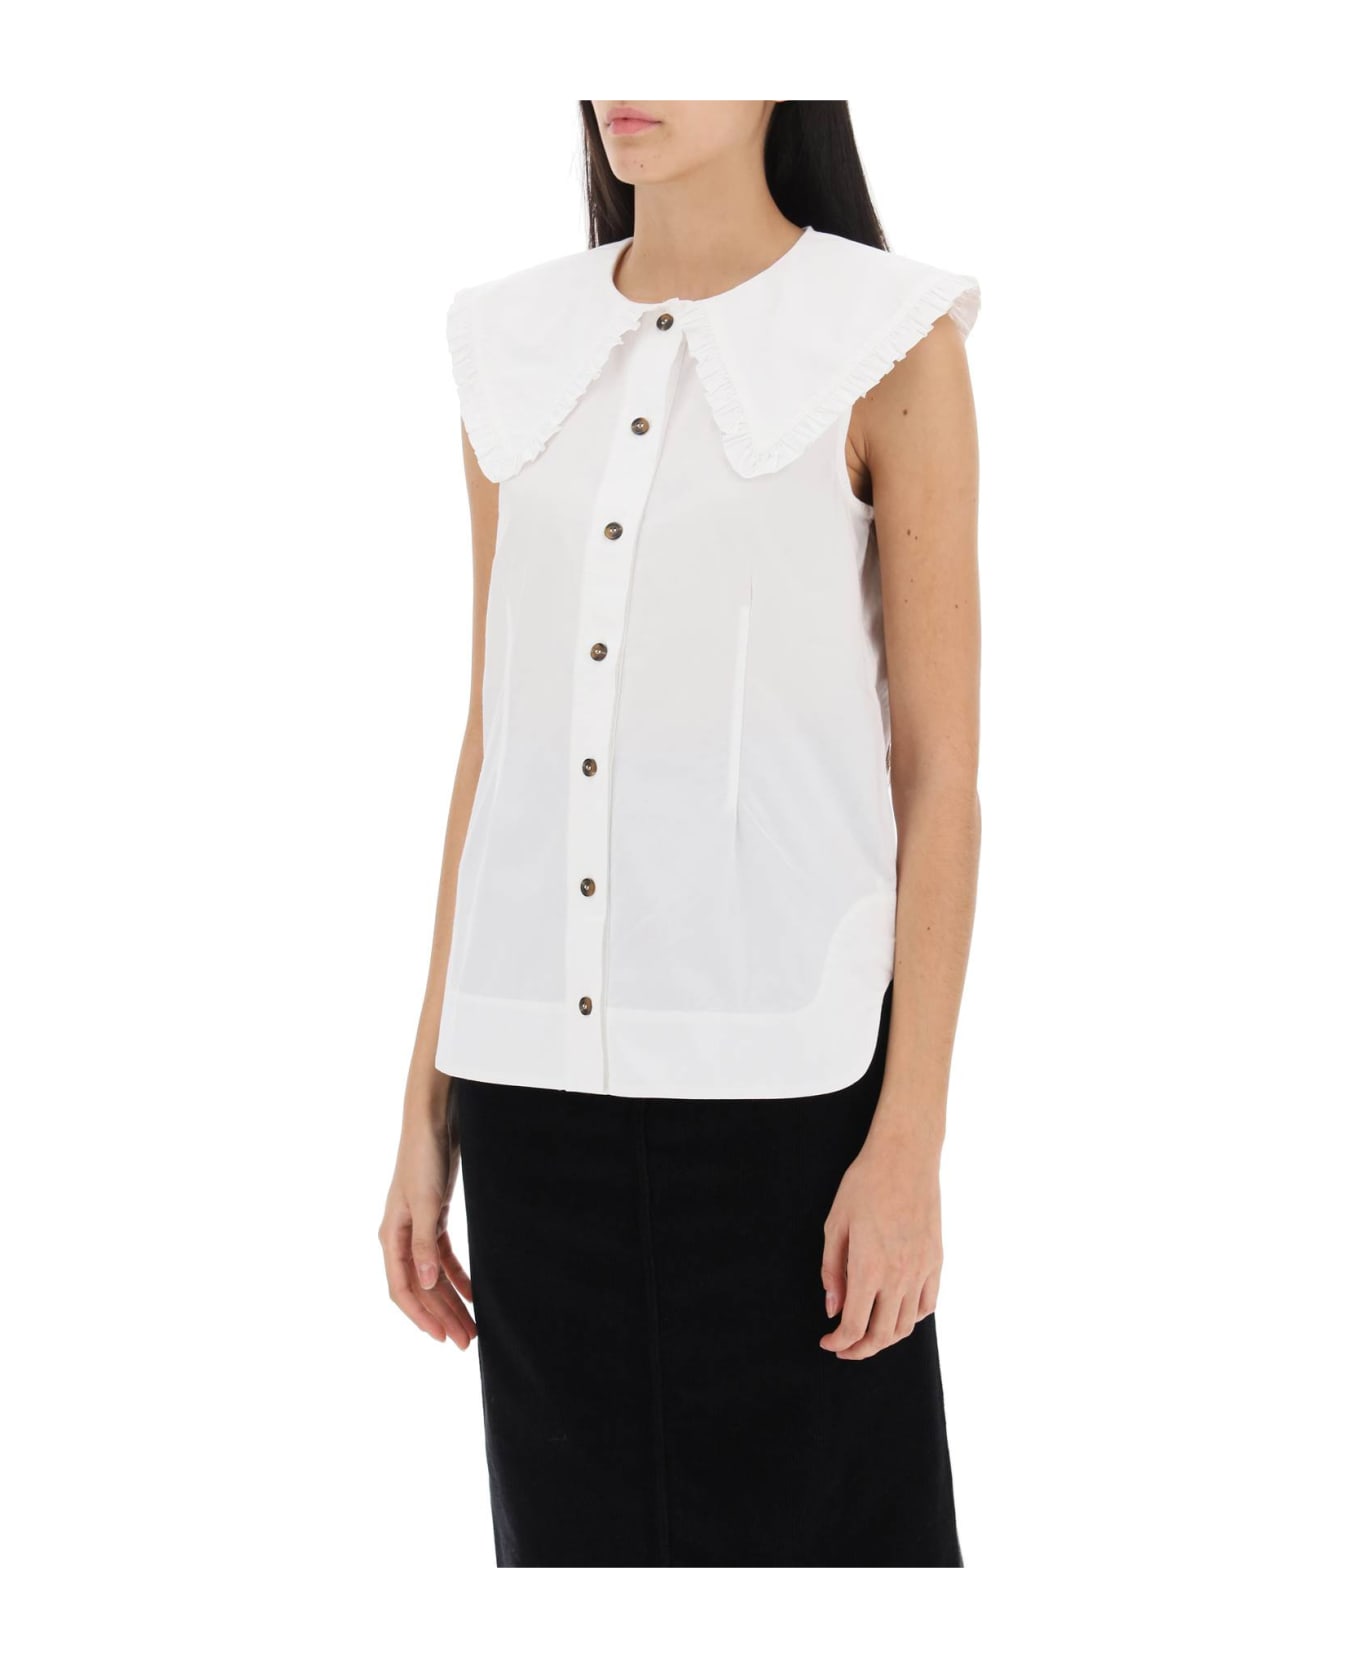 Ganni Cotton Sleeveless Shirt - White